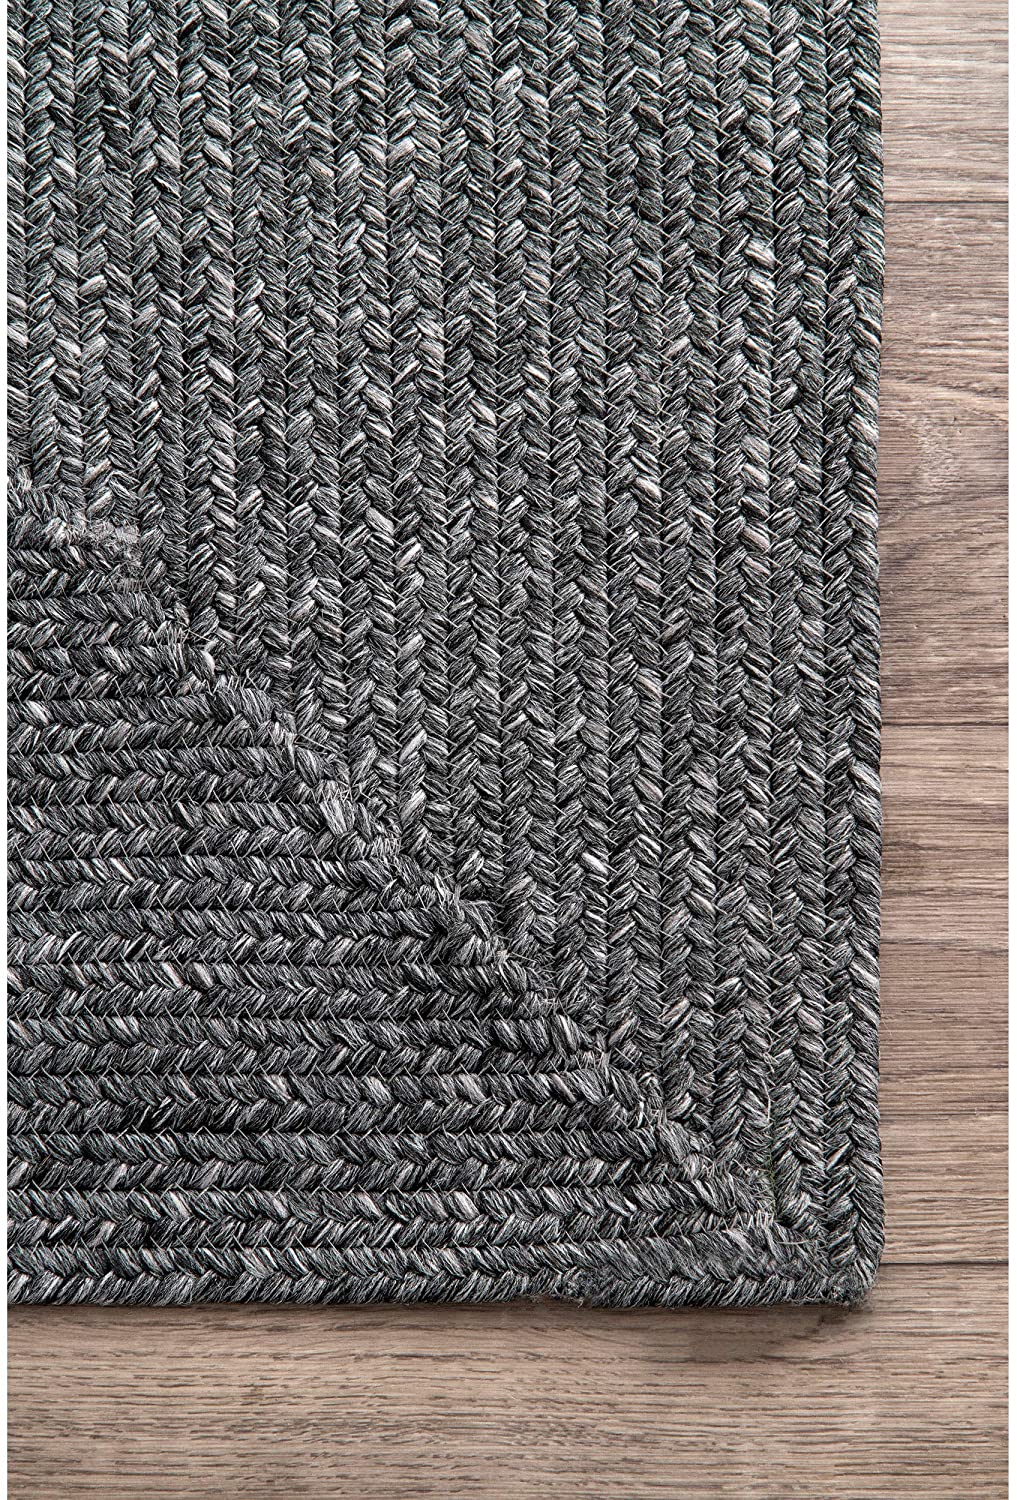 Braided Handmade Charcoal Indoor/Outdoor Soft Area Rug